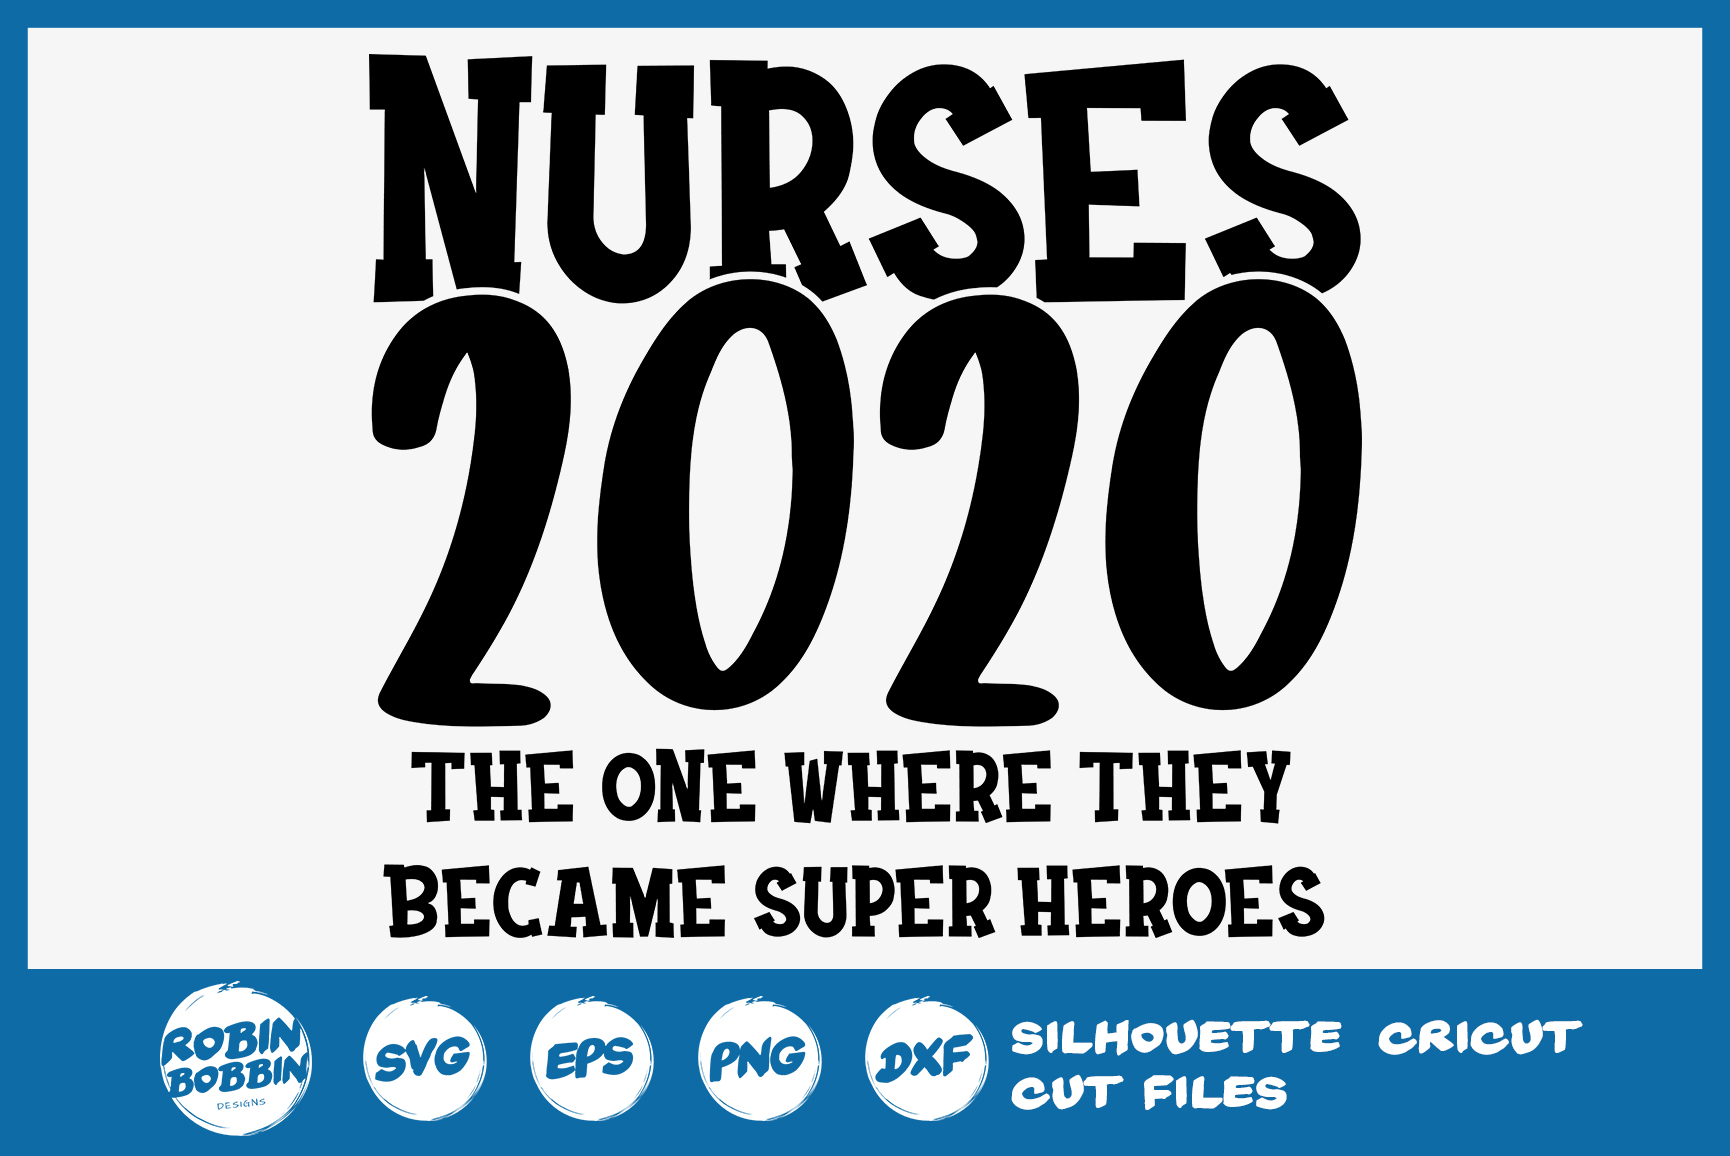 Download Nurse SVG - Nurses 2020 The One Where Became Heroes SVG